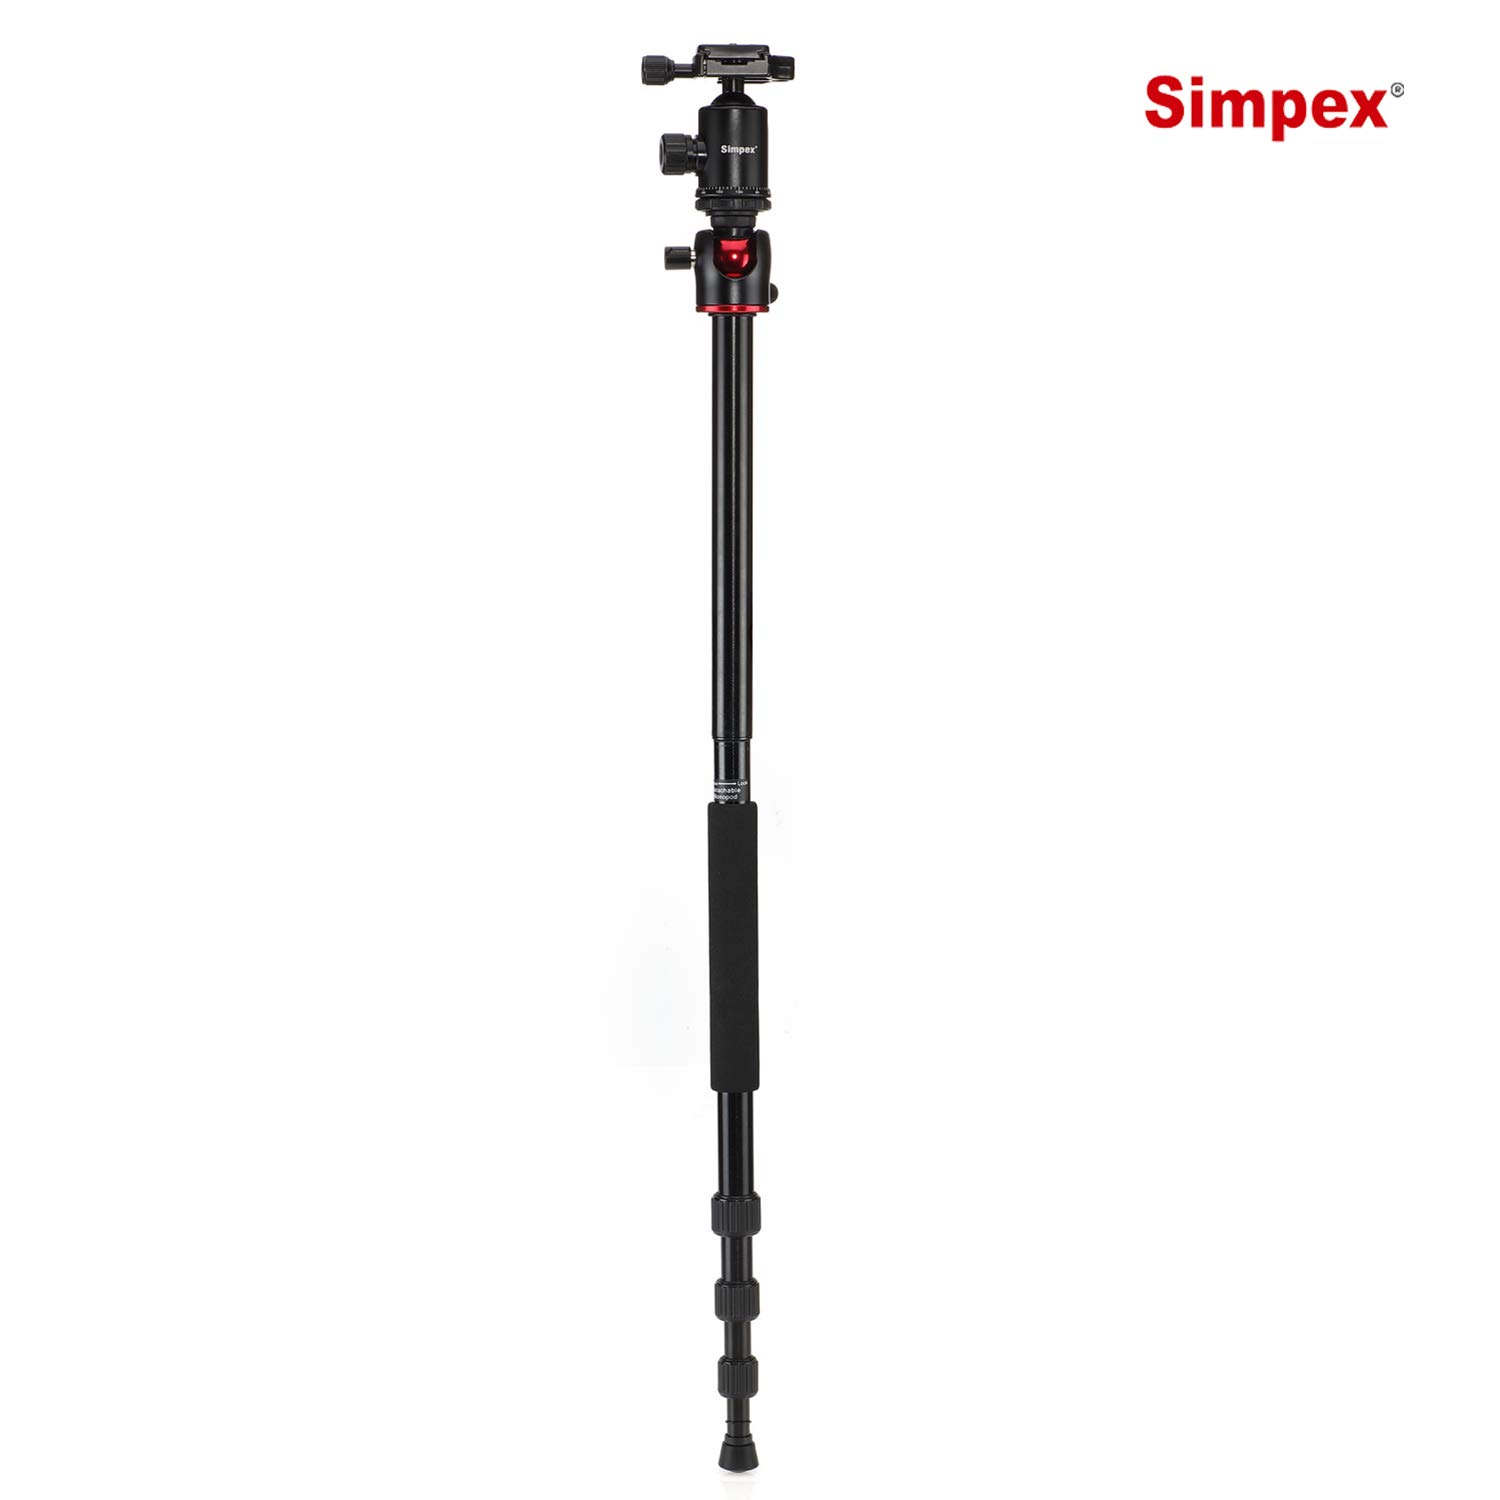 Simpex Professional Aluminium Tripod 540-TM Tripod Cum Monopod with Multipurpose Head for Low Level Shooting, Panning for All DSLR Camera